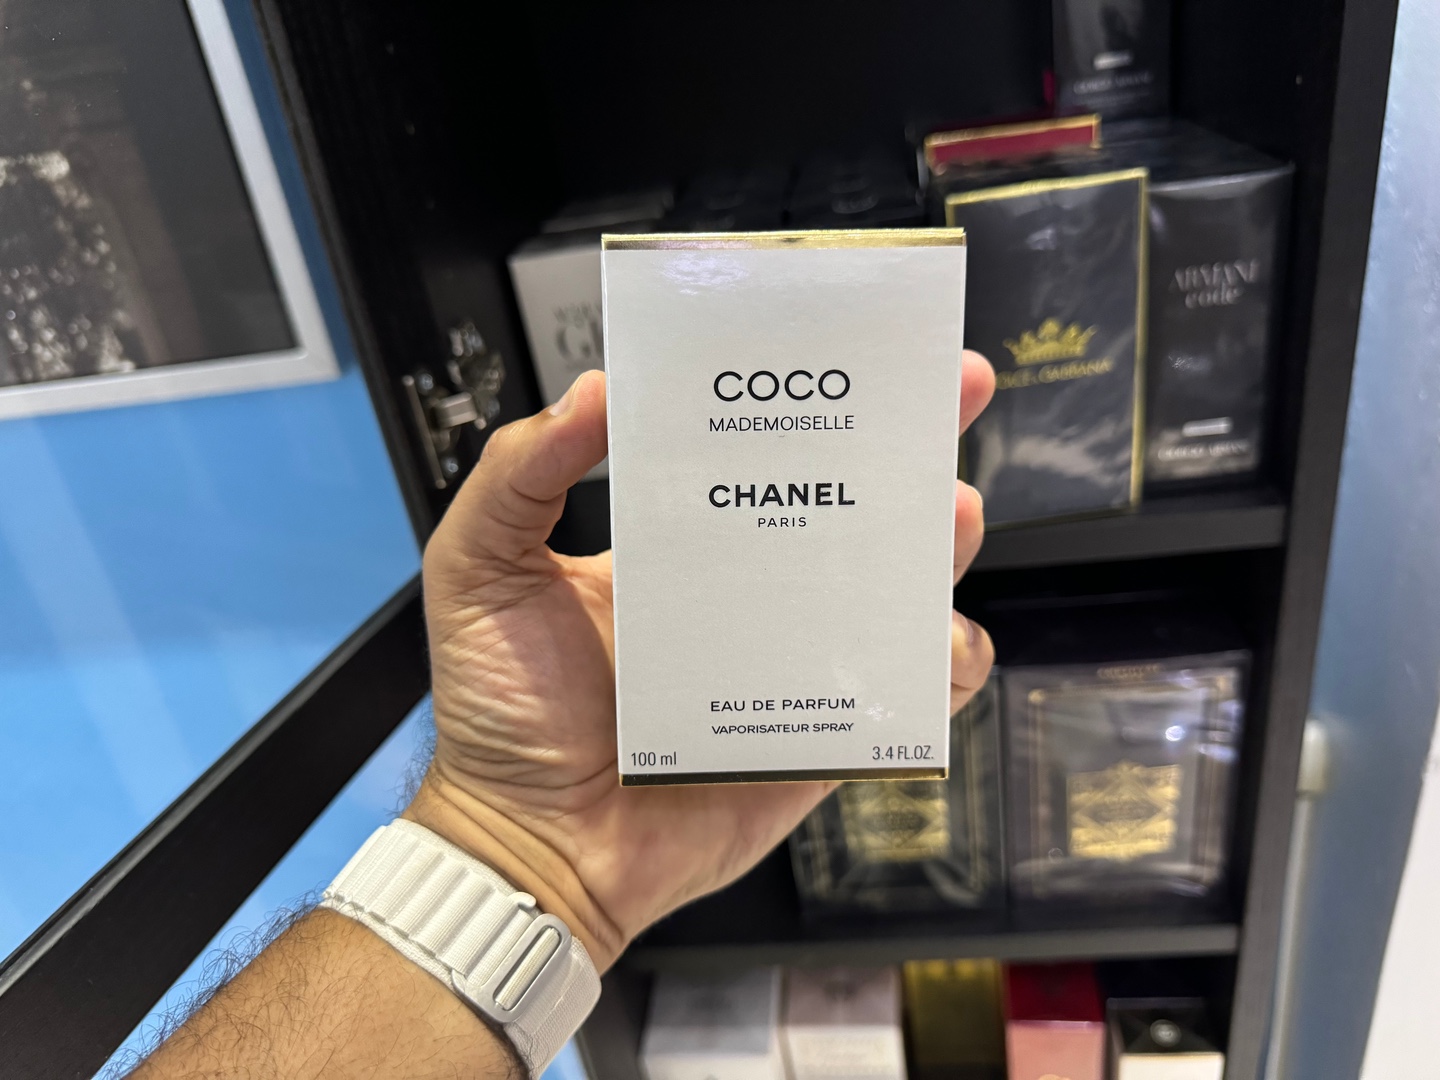 joyas, relojes y accesorios - Perfume Coco Mademoiselle Chanel Paris EDP 100ml, Nuevo, Original, RD$ 9,300 NEG